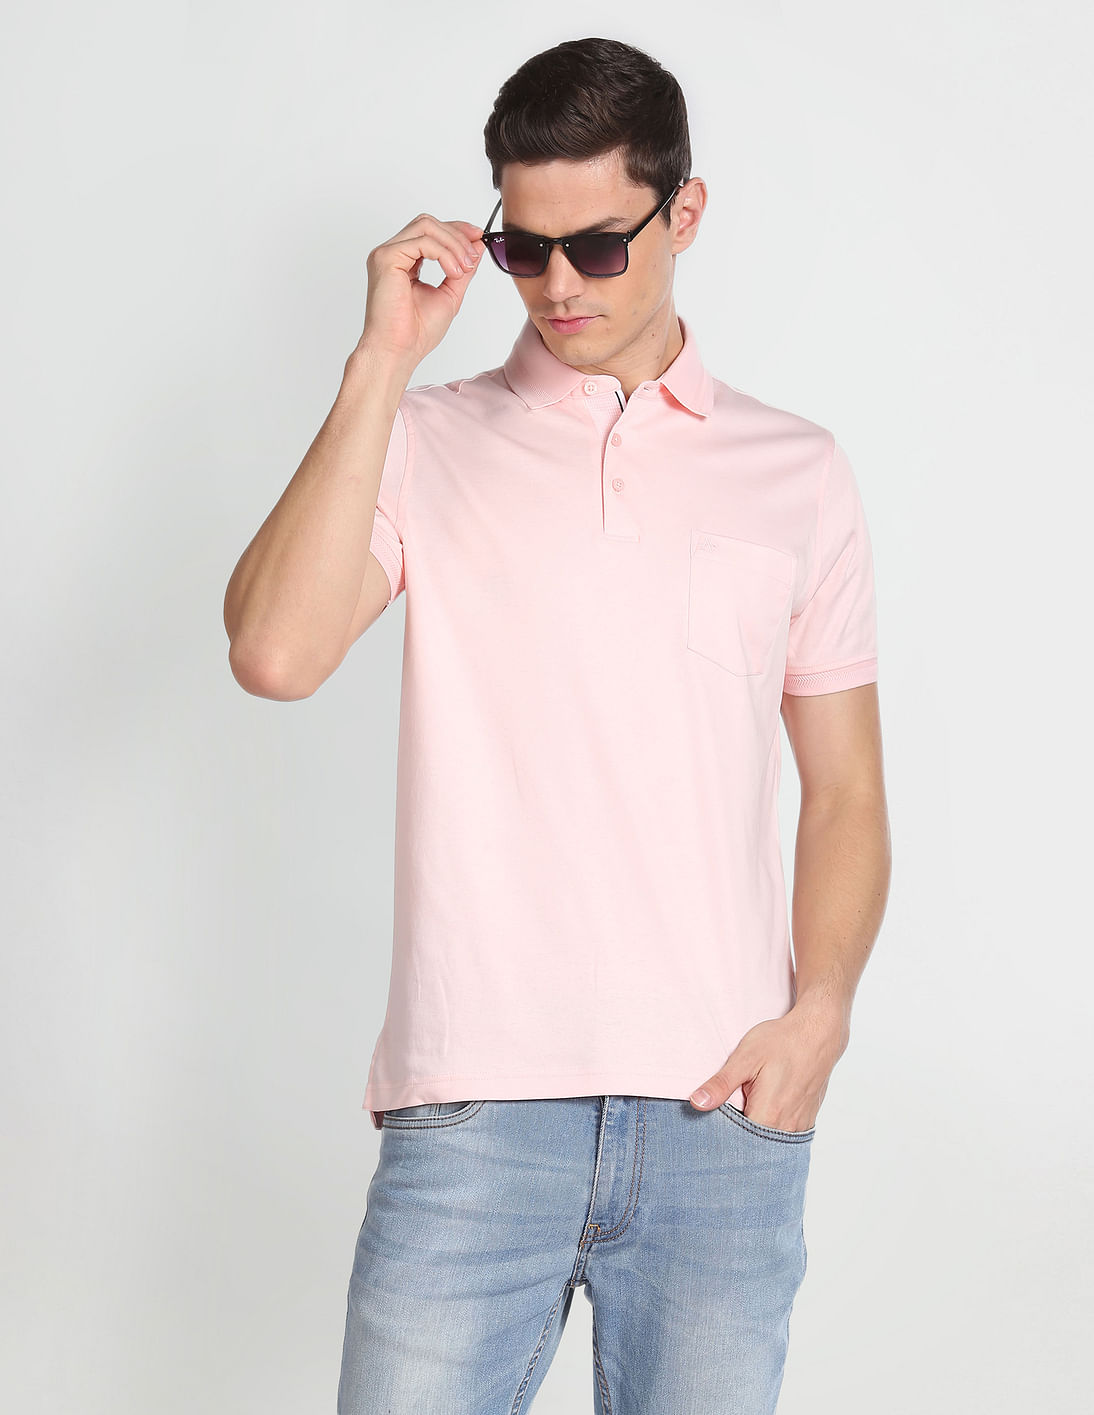 Buy Arrow Mercerised Cotton Solid Polo Shirt - NNNOW.com